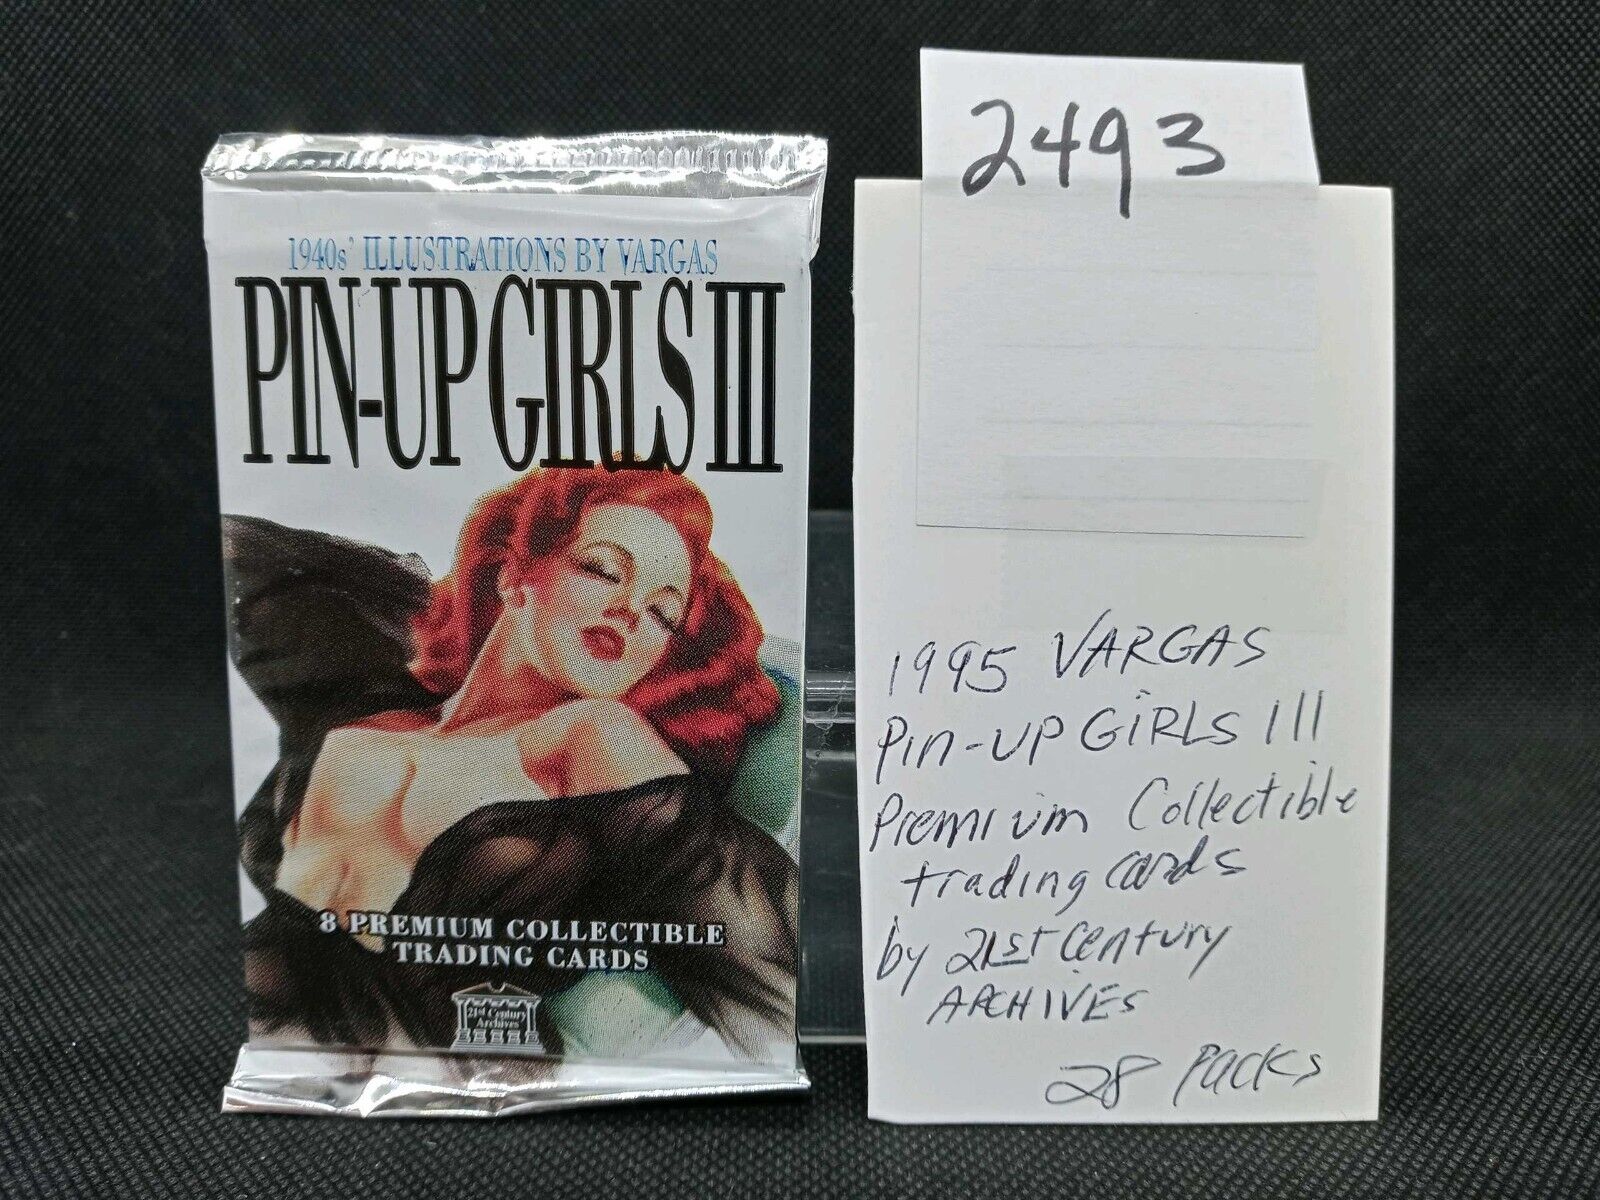 1995 Alberto Vargas Pin-Up Girls III Trading Card Pack (1)